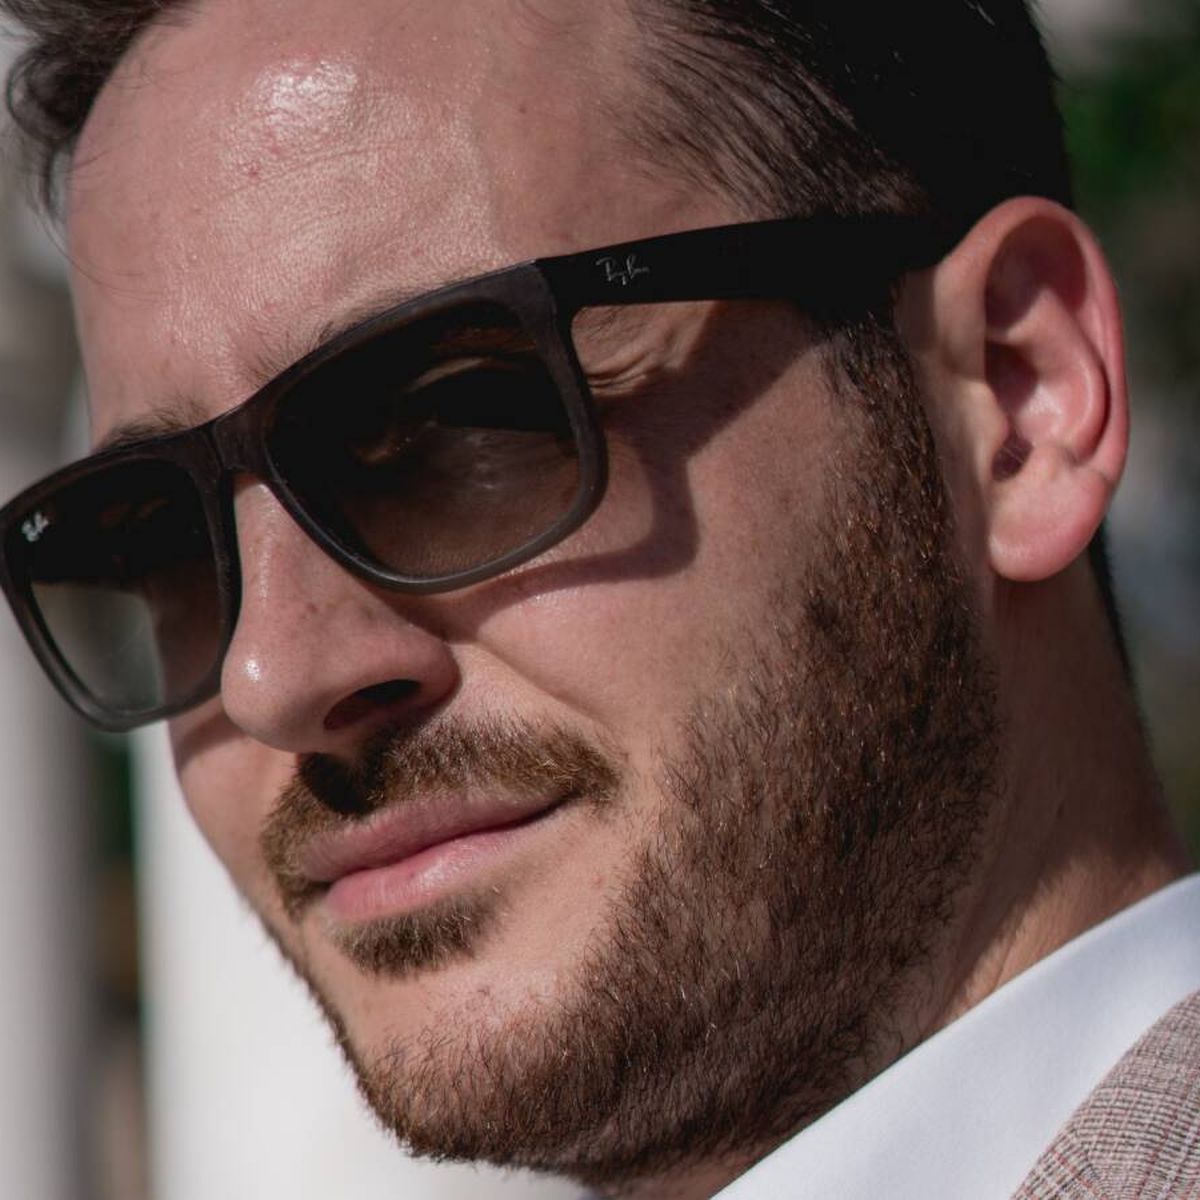 Gafas de Sol Para Hombres Lentes de Moda Disenador Cuadrado Grande  Sunglasses 